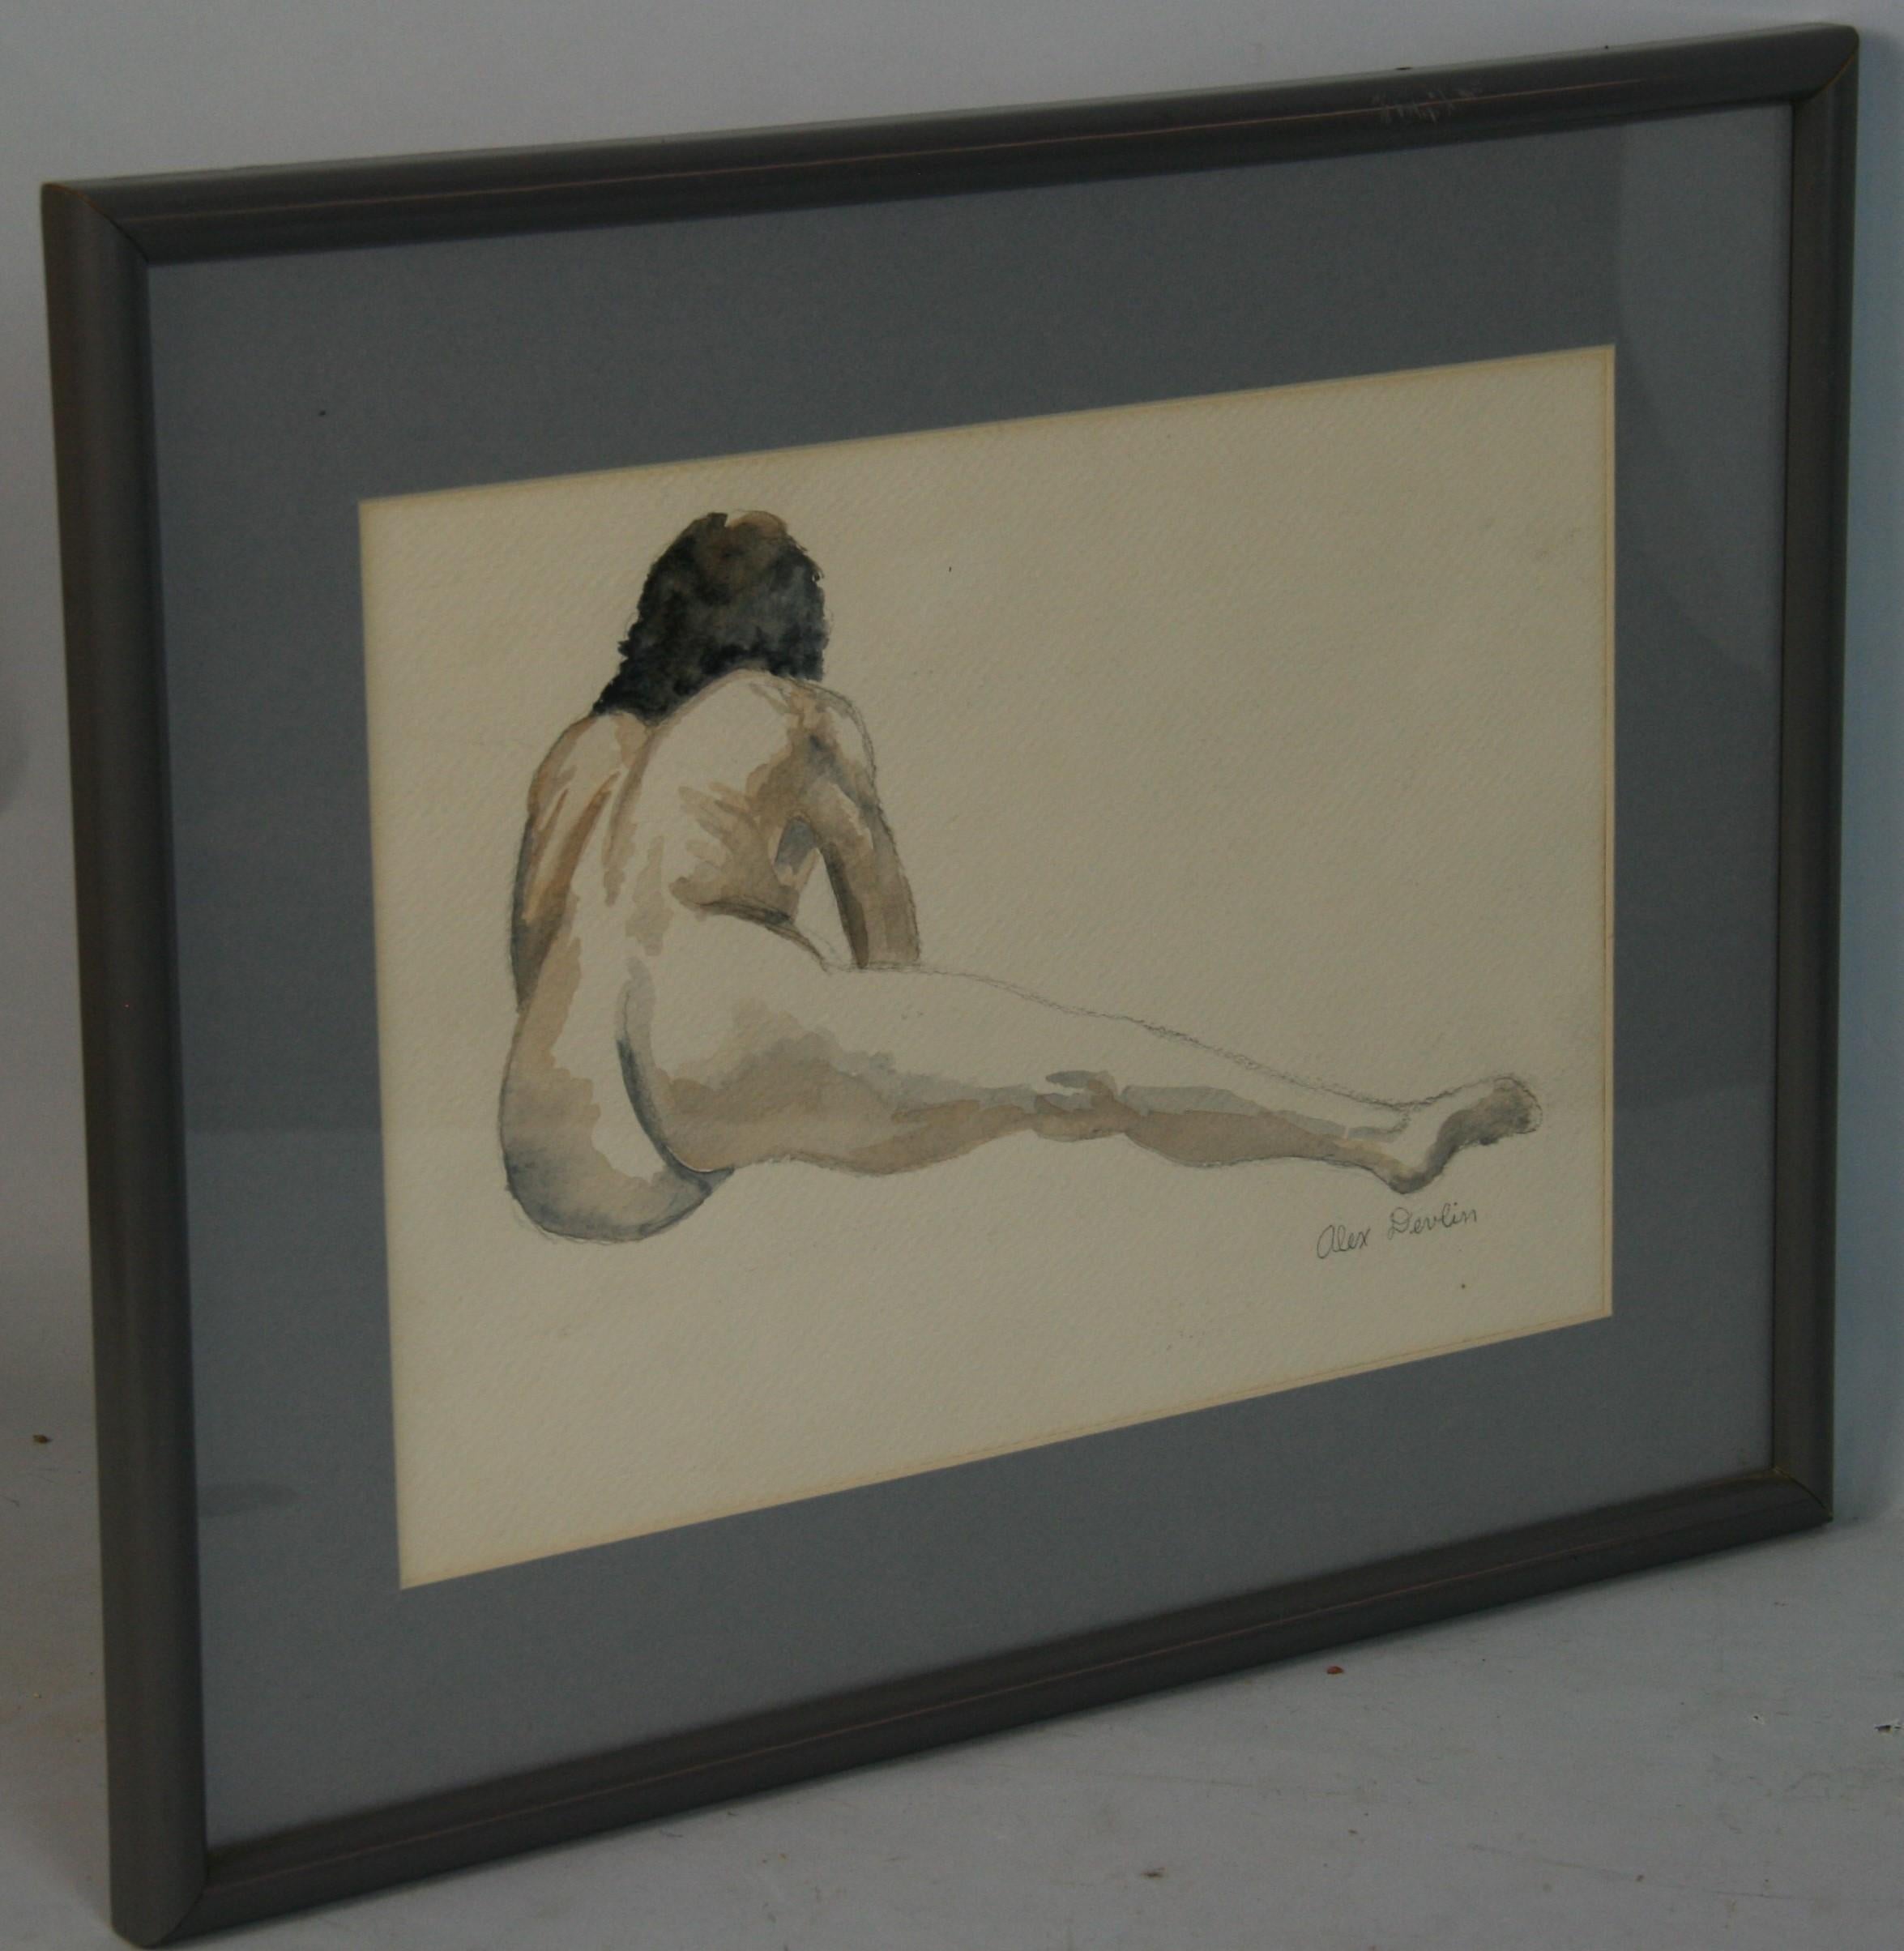 5067 Male nude recling seen from rear by Alex Devlin
Image size 9.5x 13.5